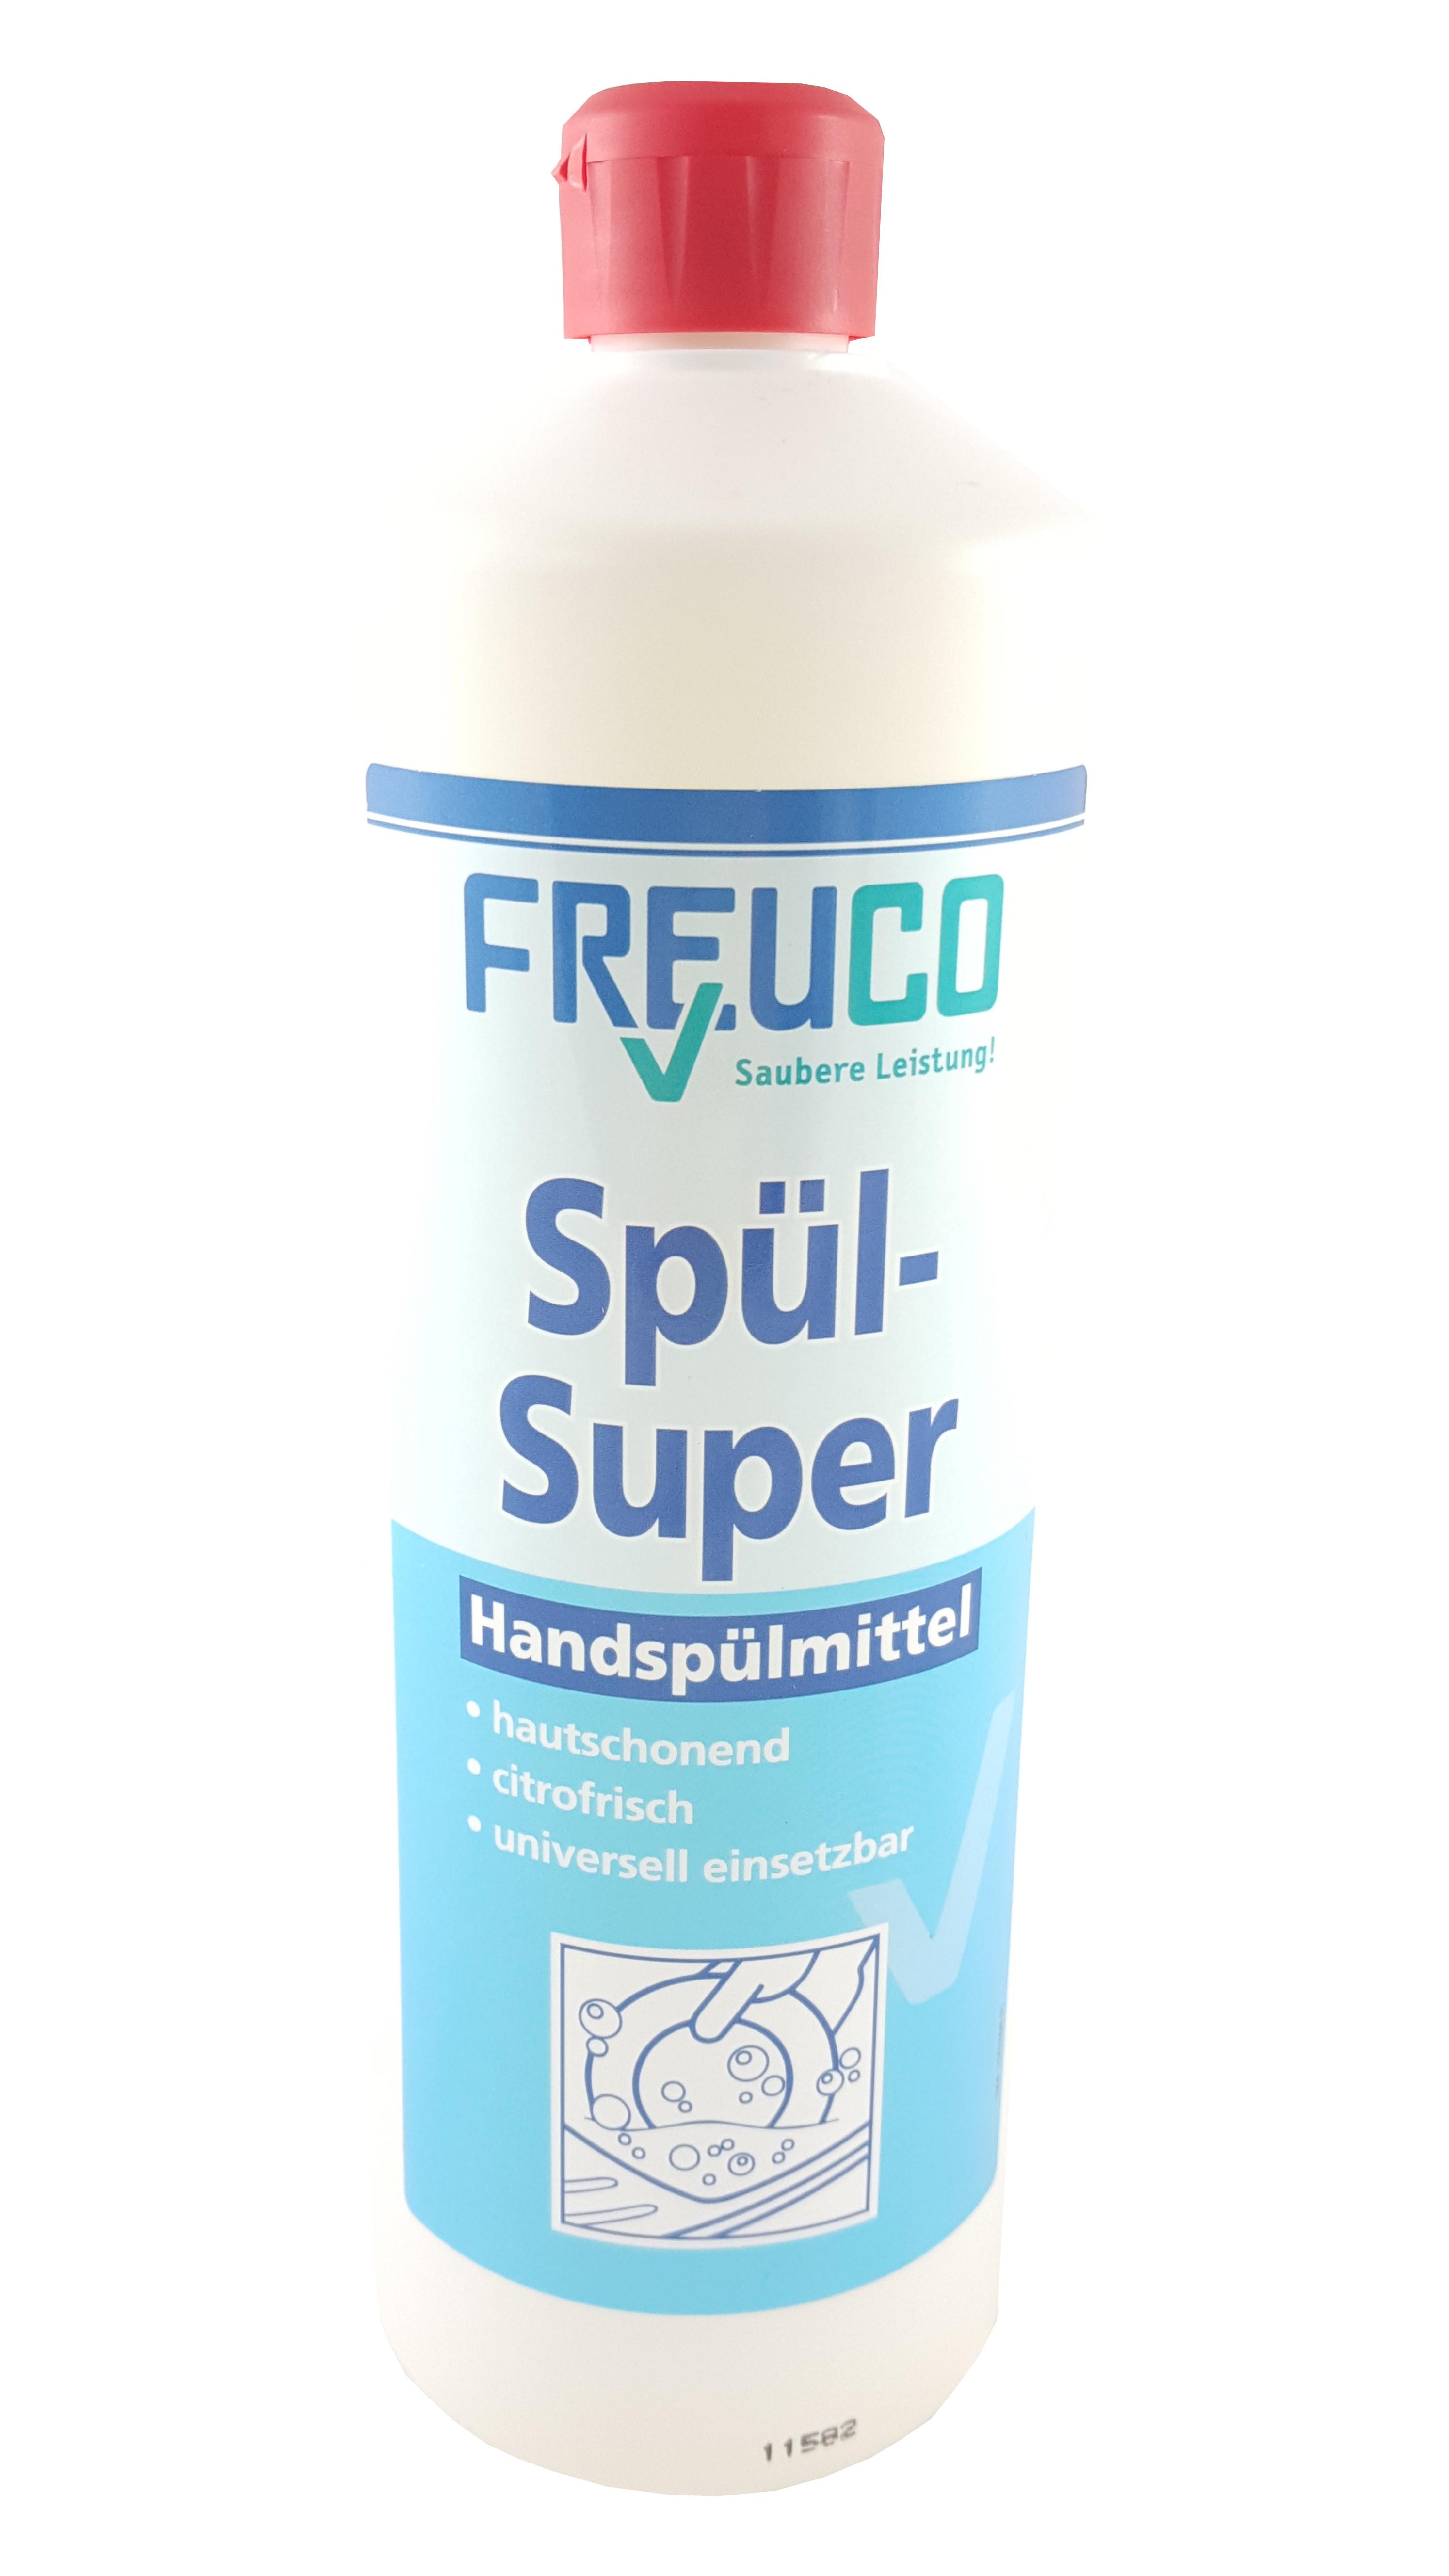 Freuco Spül - Super Handspülmittel 1000 ml Flasche